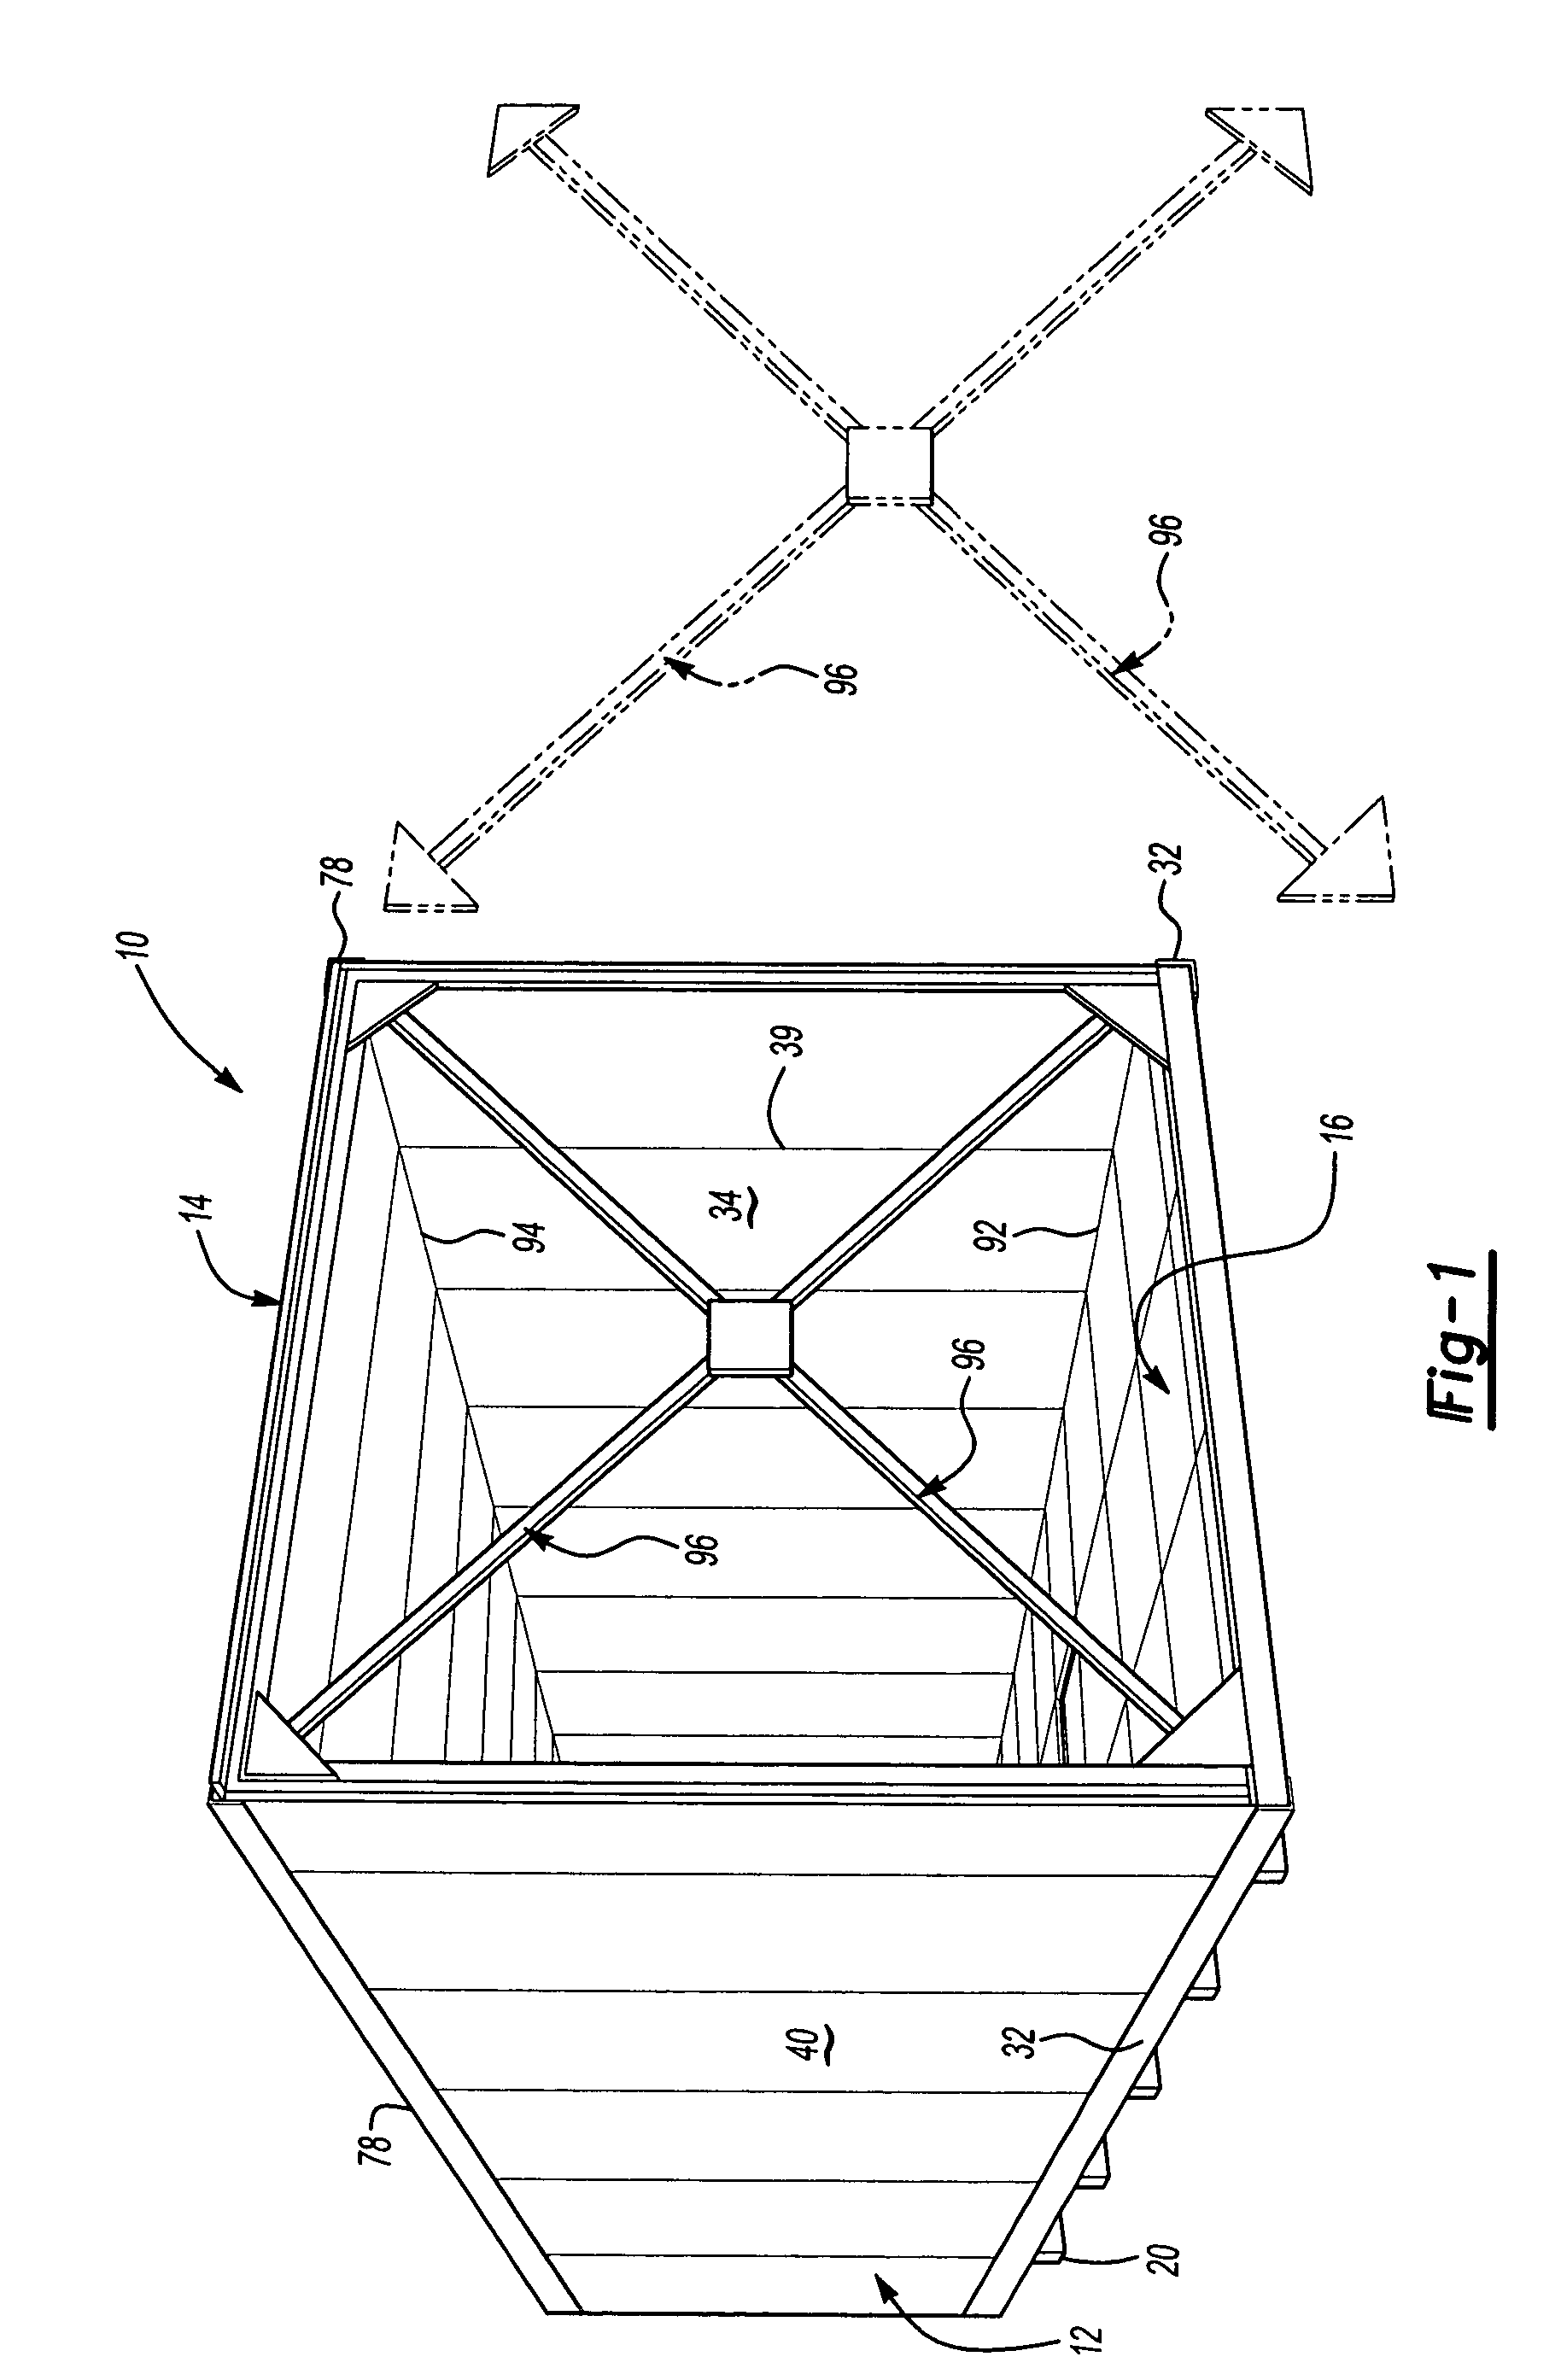 Modular paint oven